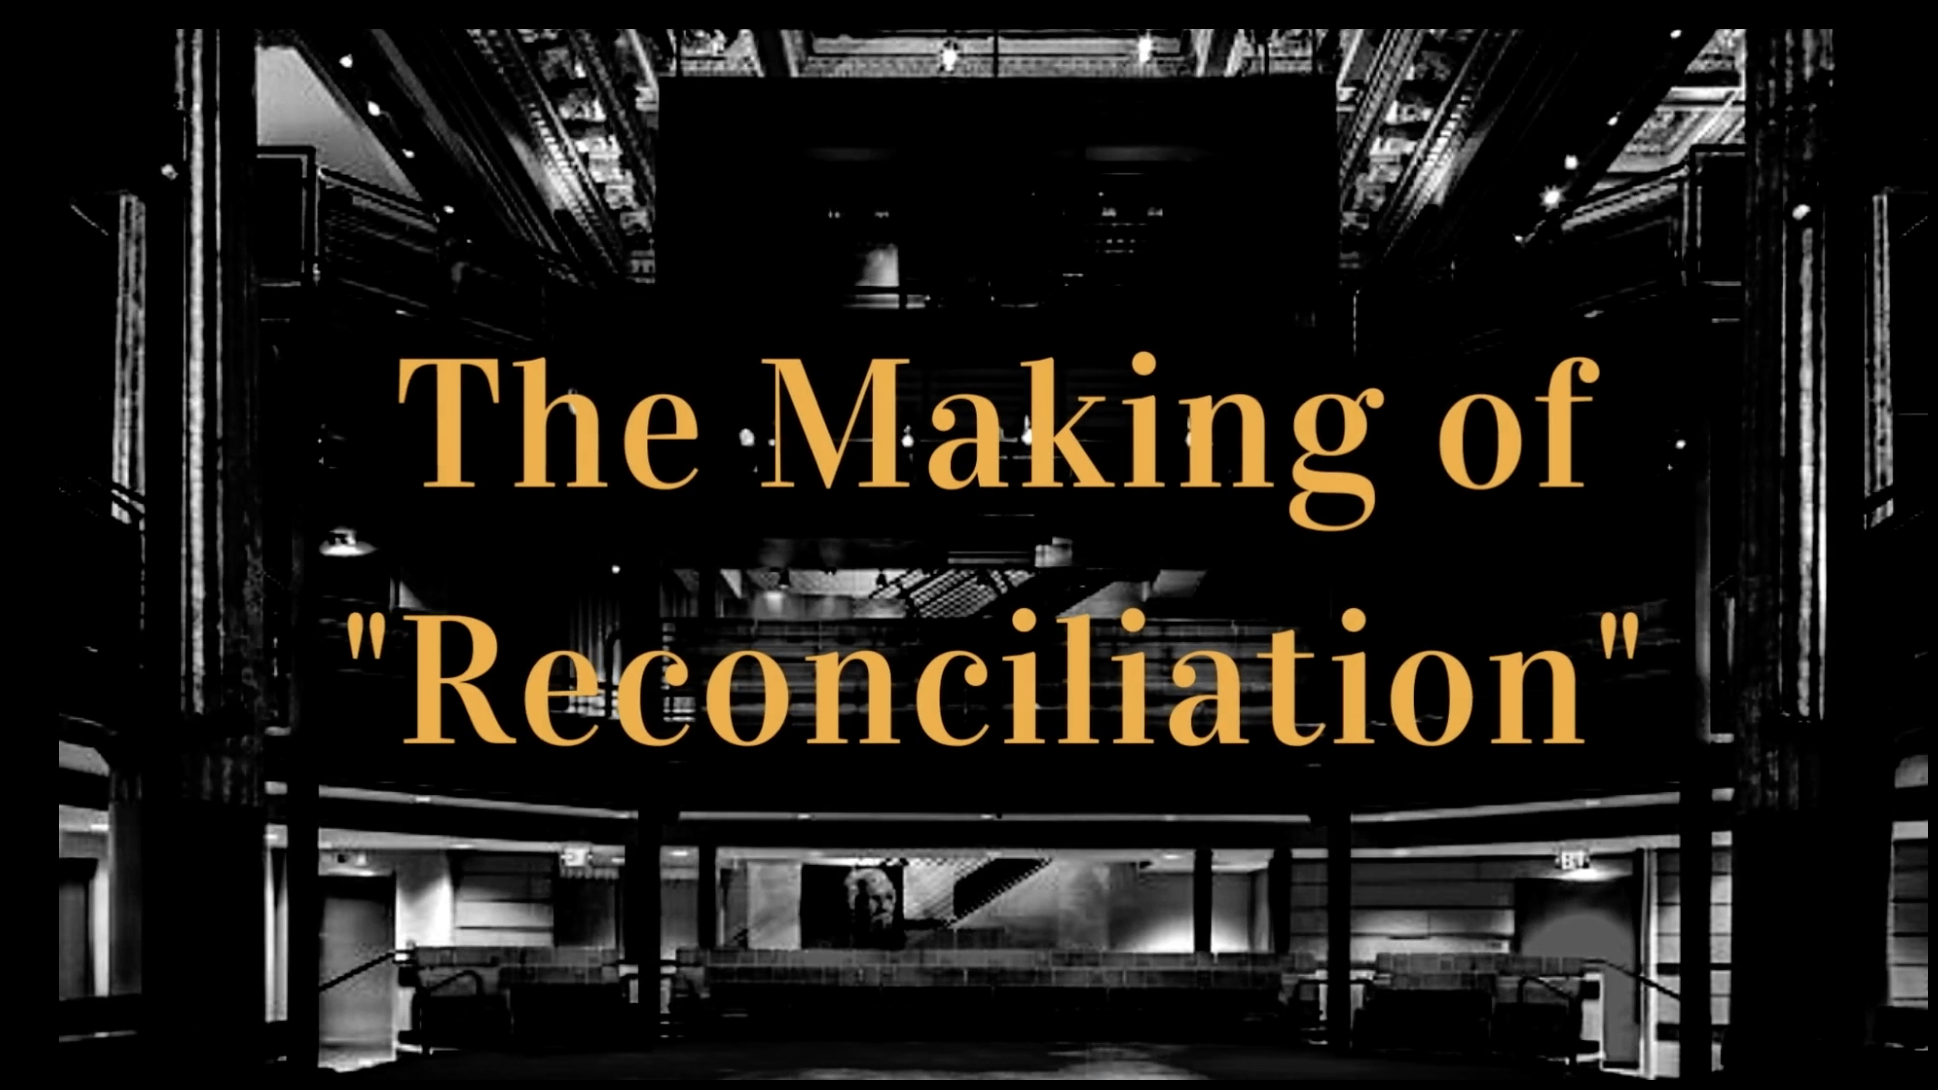 Reconciliation (documentary narration)